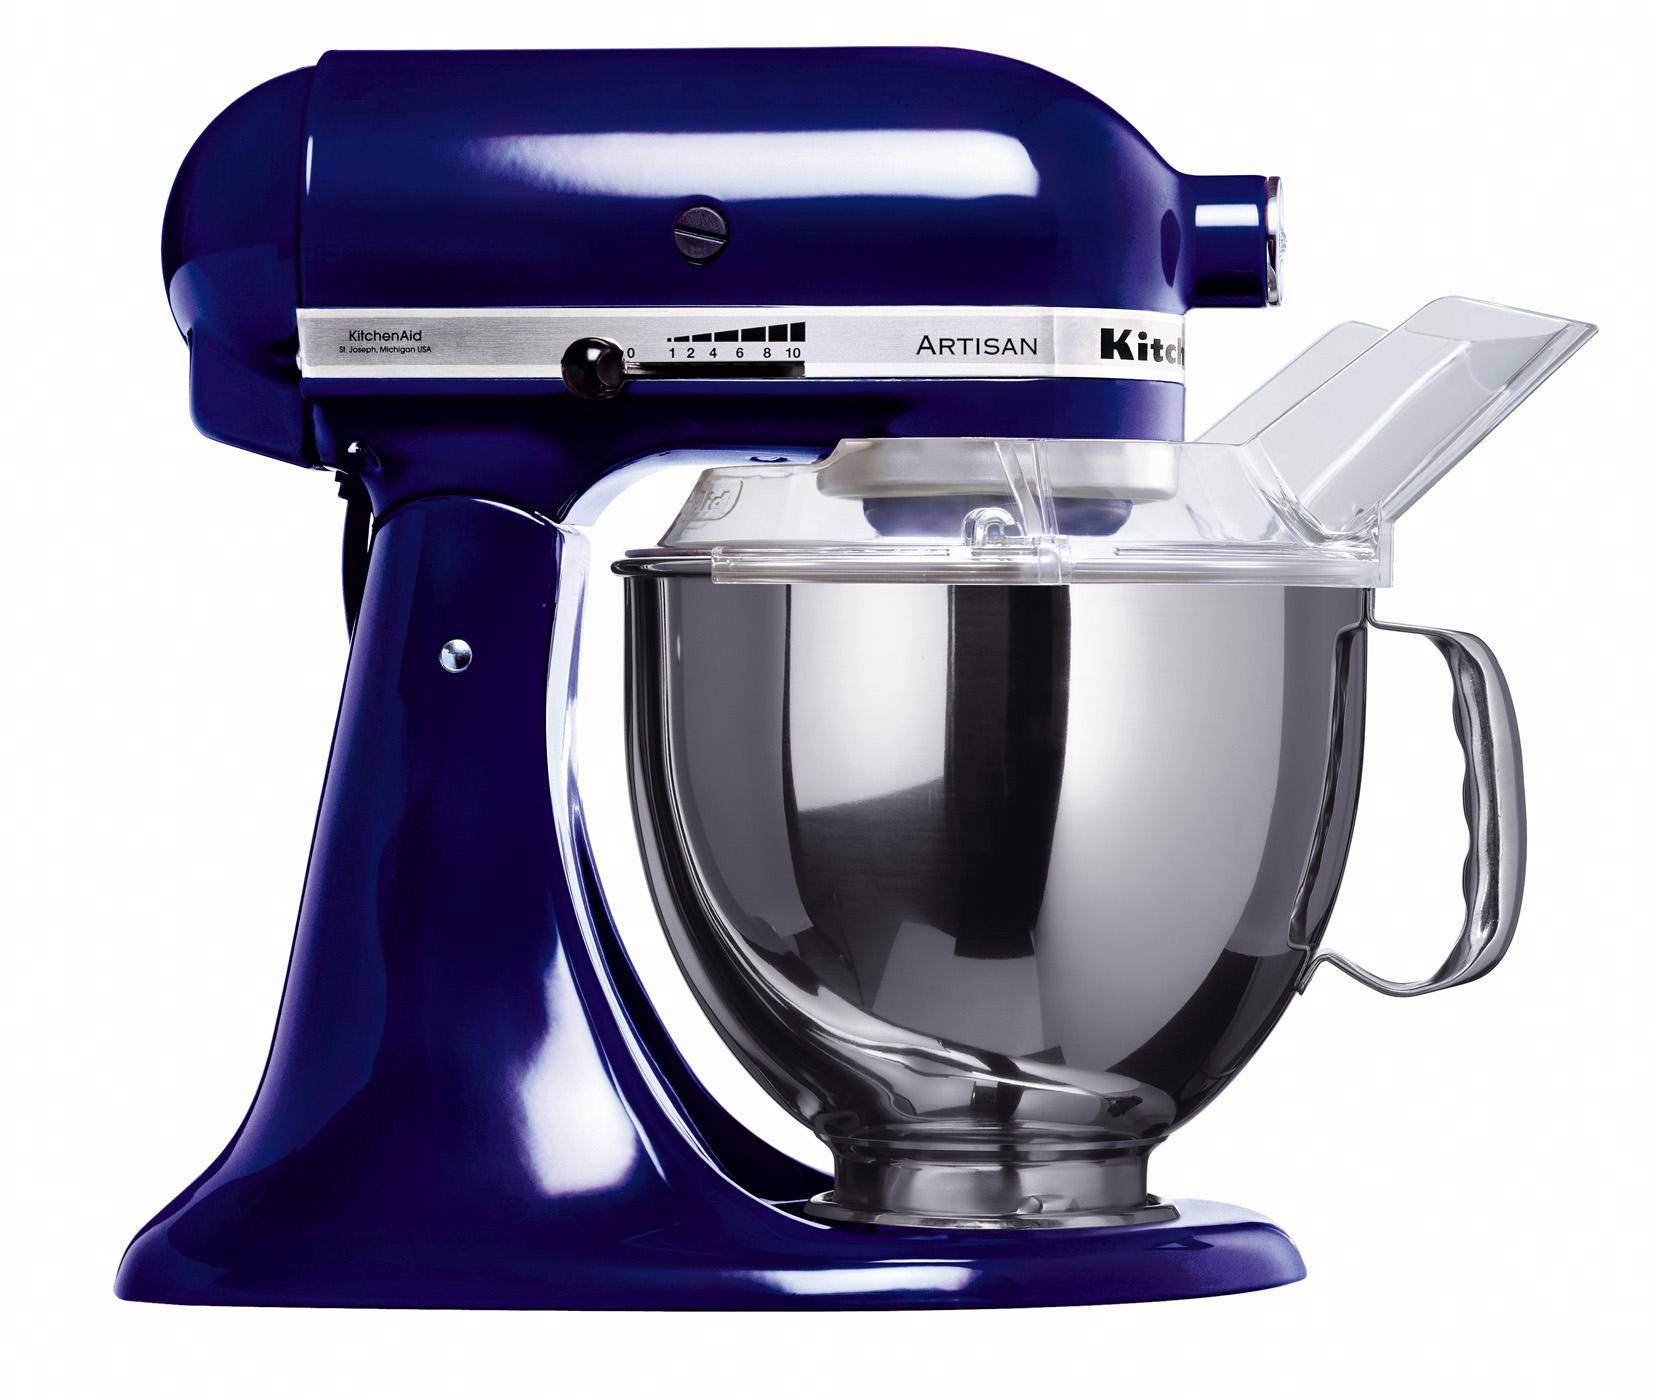 Foto KitchenAid Robot de Cocina Artisan azul (H.Nr.: 5KSM150PSEUB)